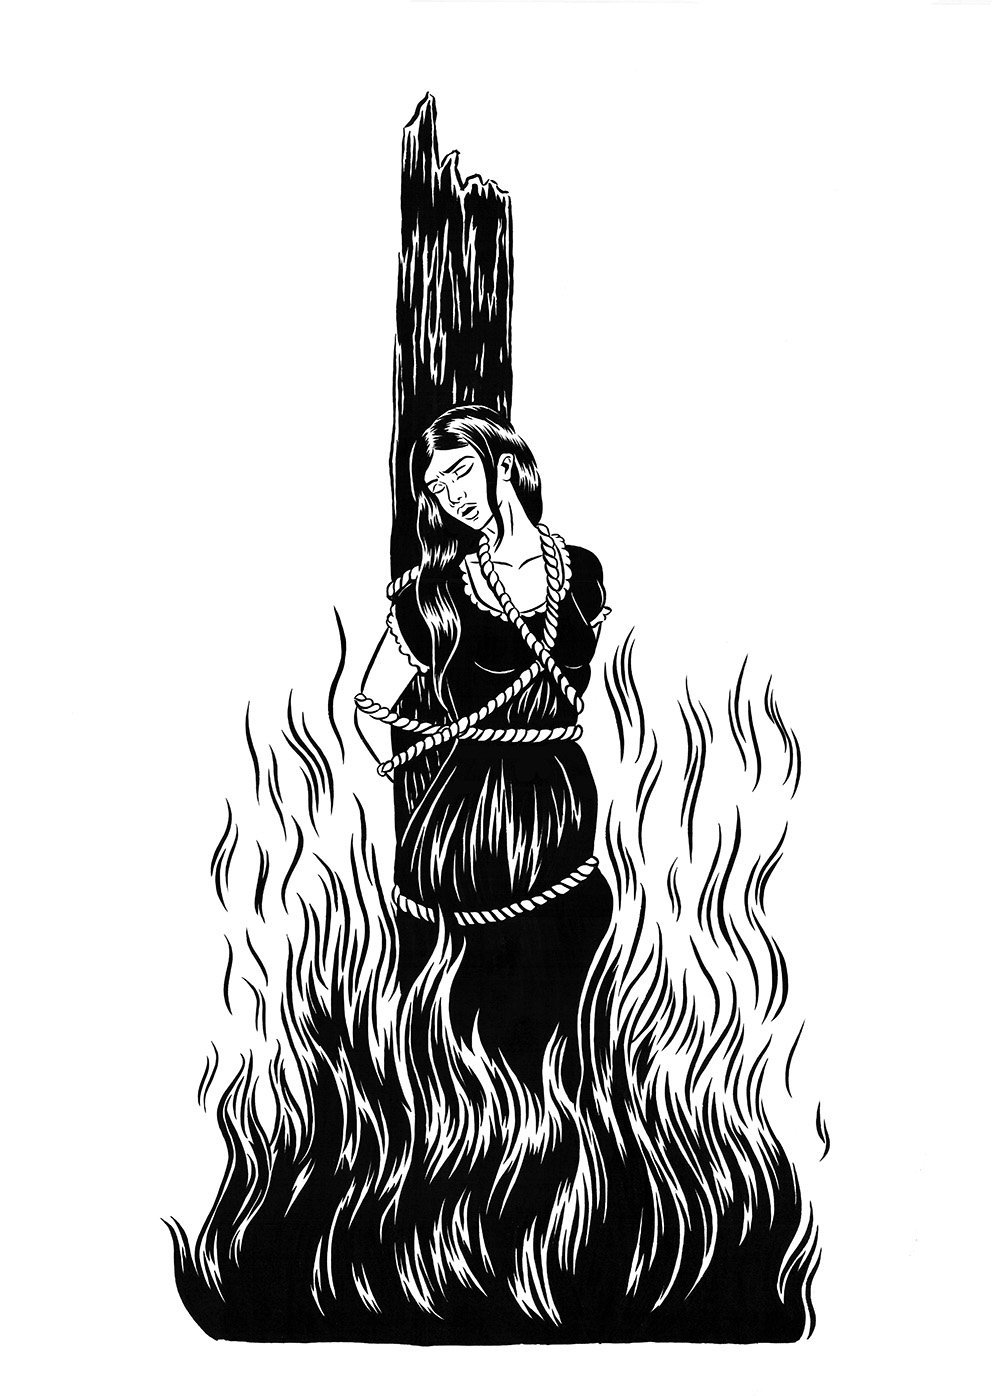 Рисунок сжигание. Марко Мелграти ведьма на костре. Фредерик Уайт ведьма на костре. Сжигание ведьм на костре инквизиции.